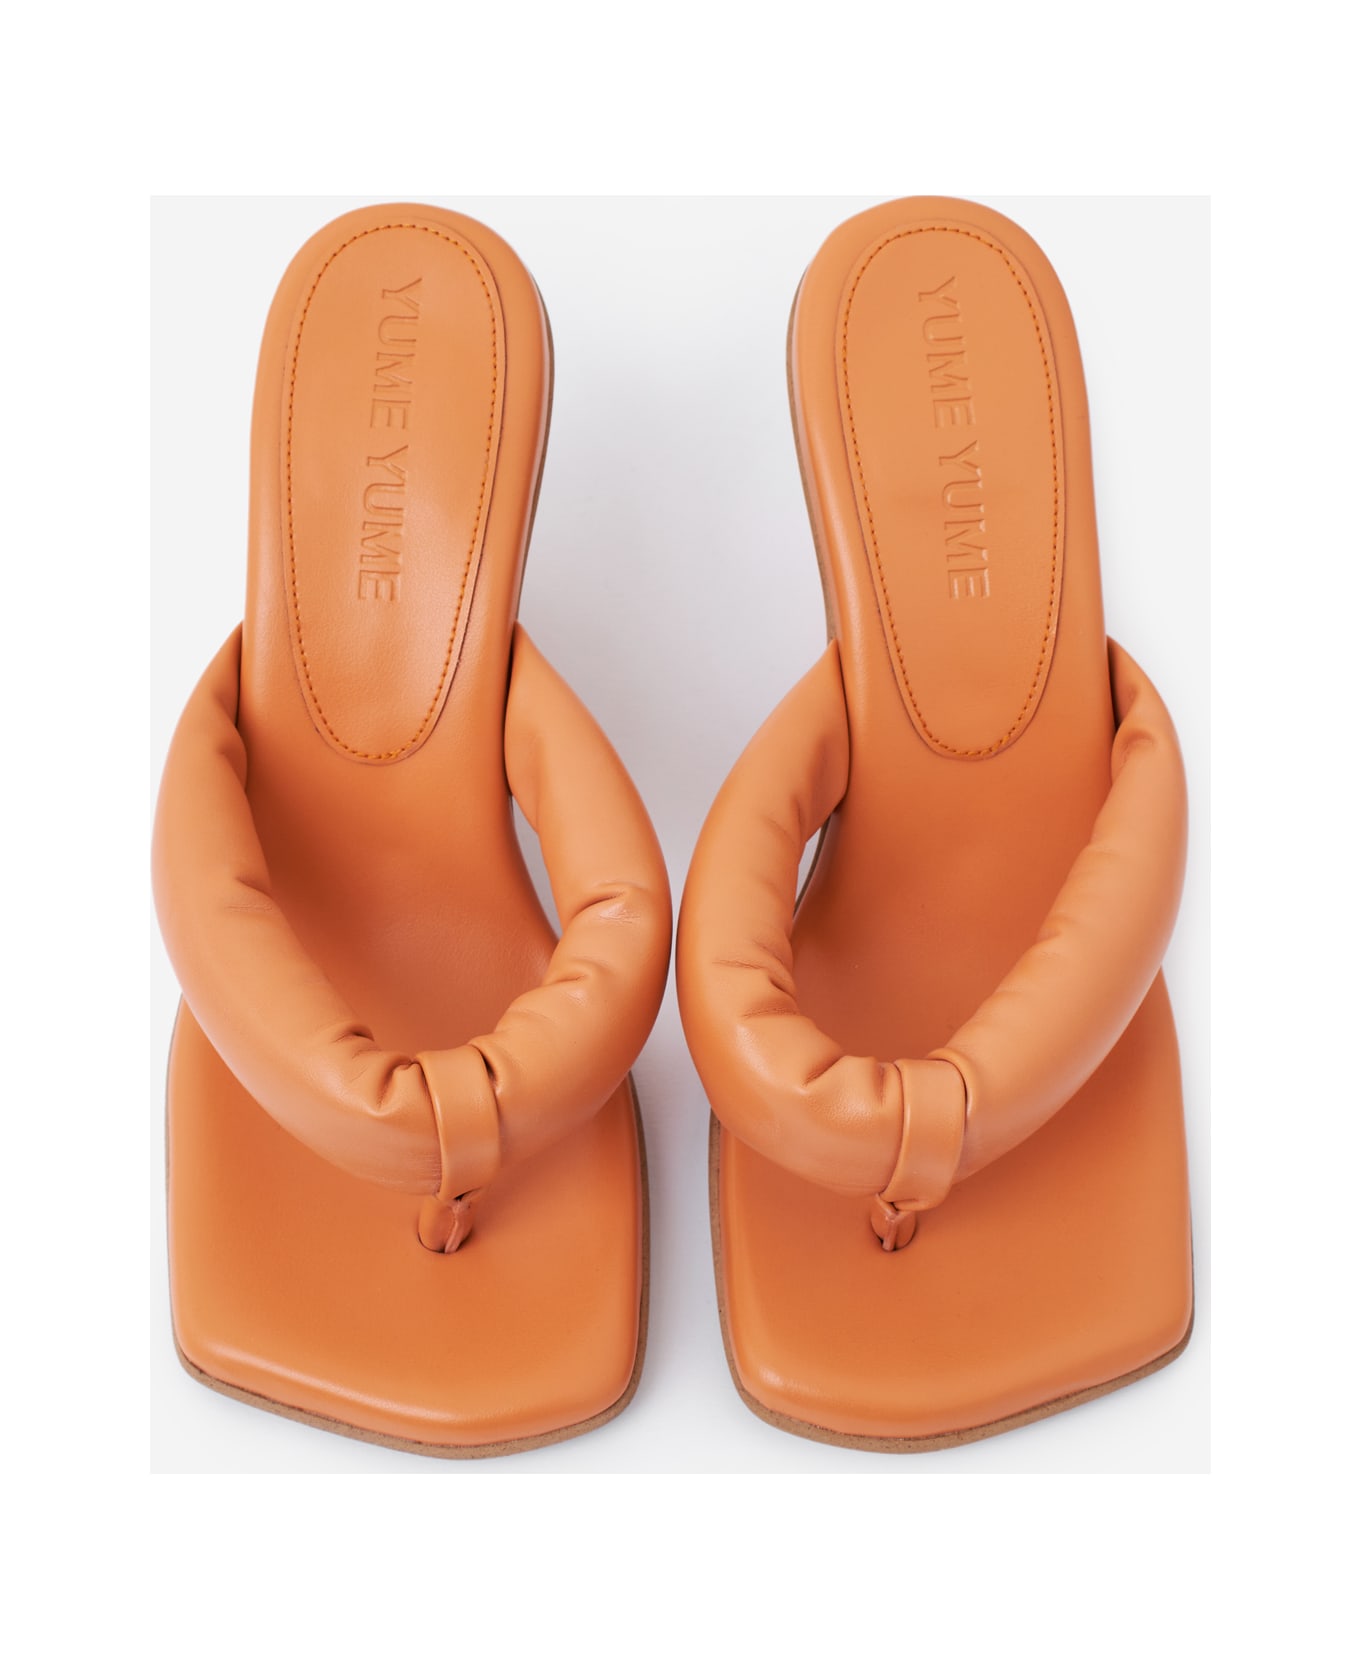 YUME YUME Love Mule Sandals - orange サンダル